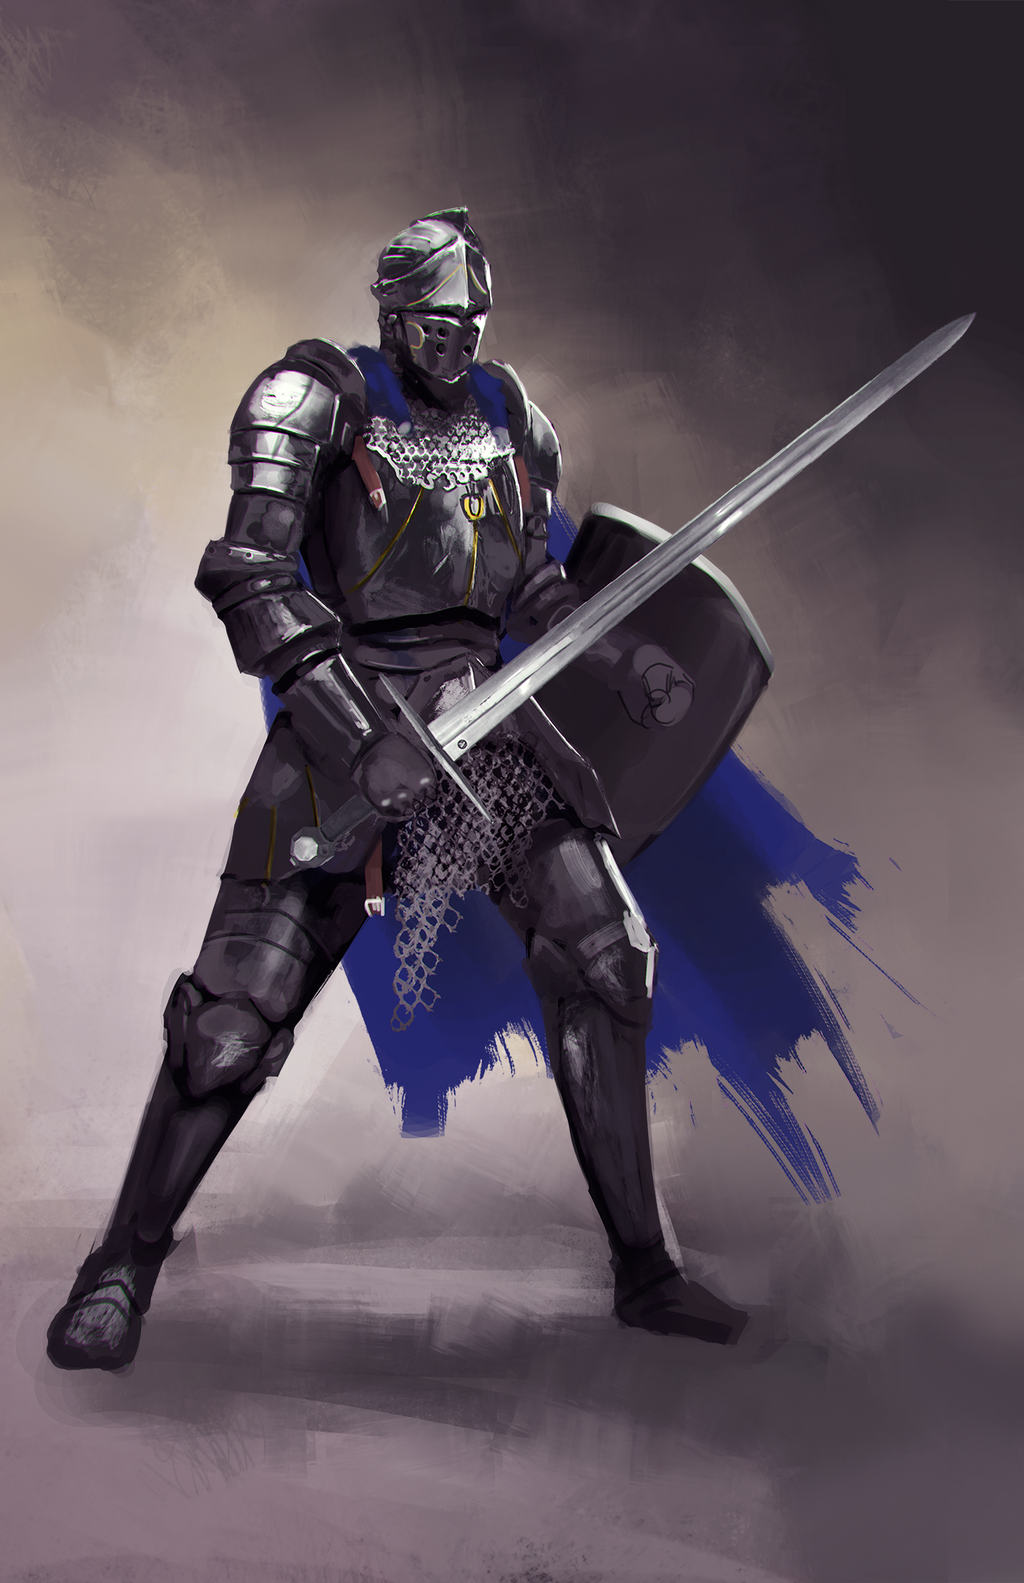 Medieval Knight by jeffchendesigns on DeviantArt